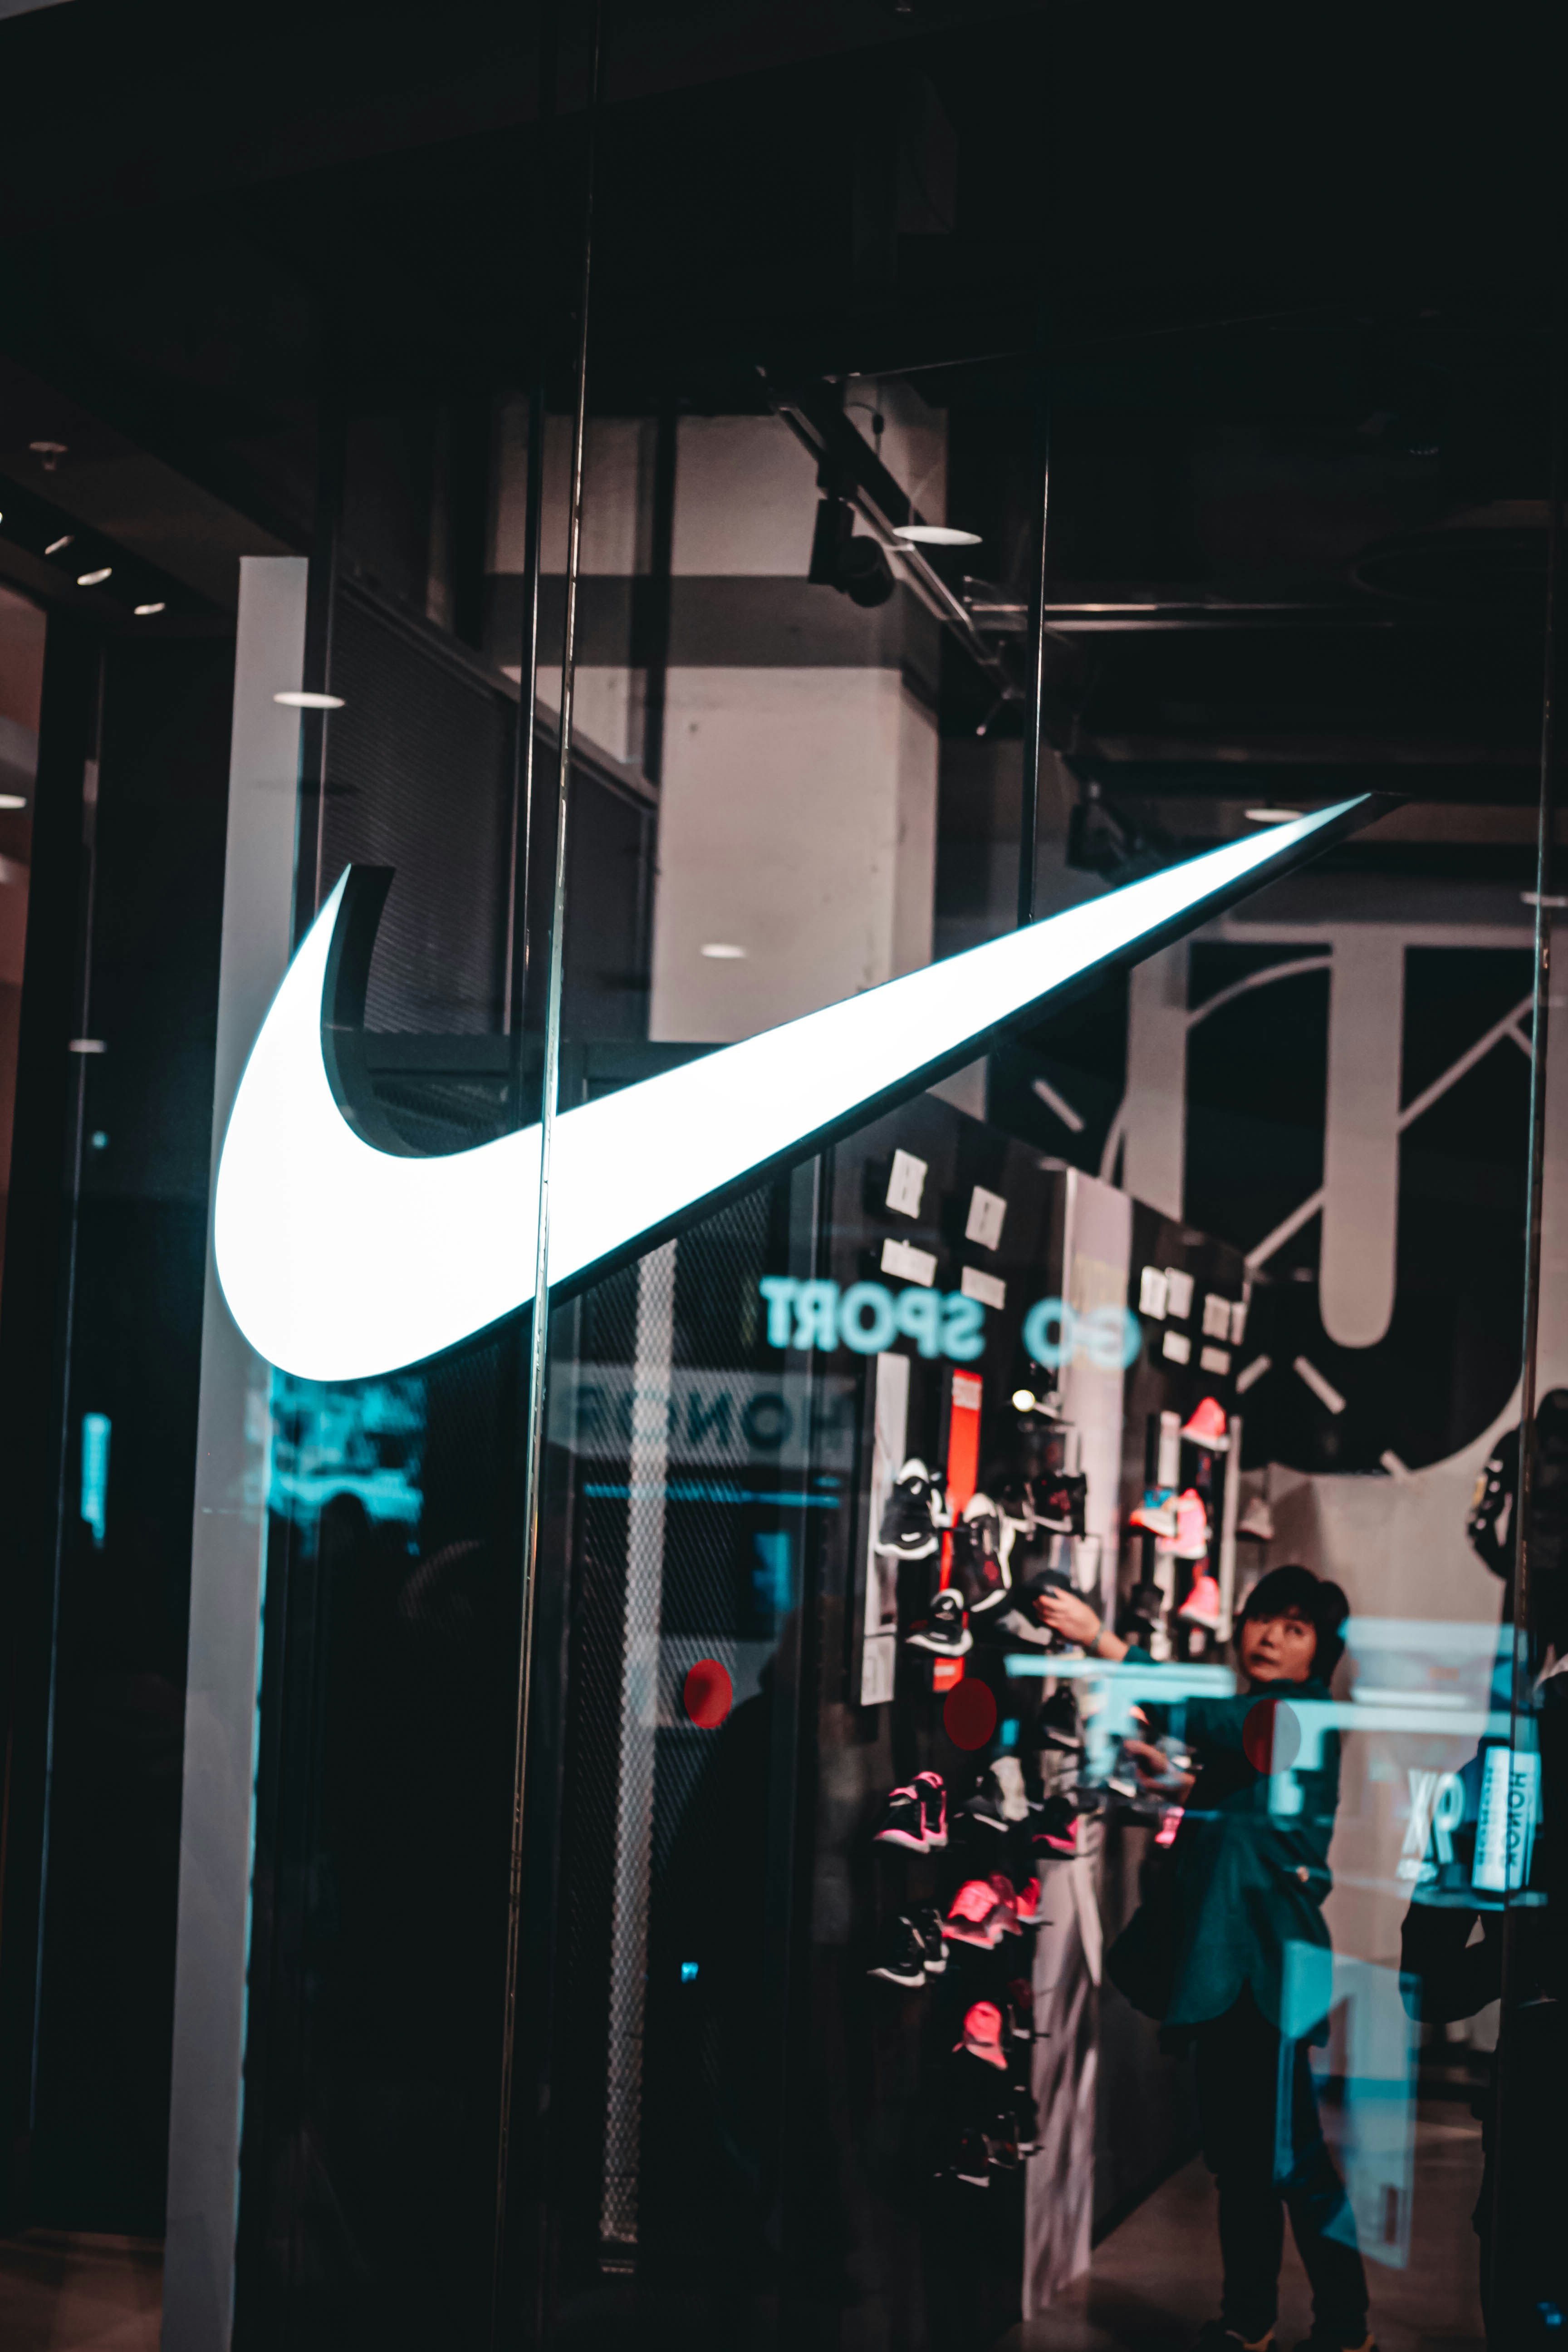 Nike logo on wall